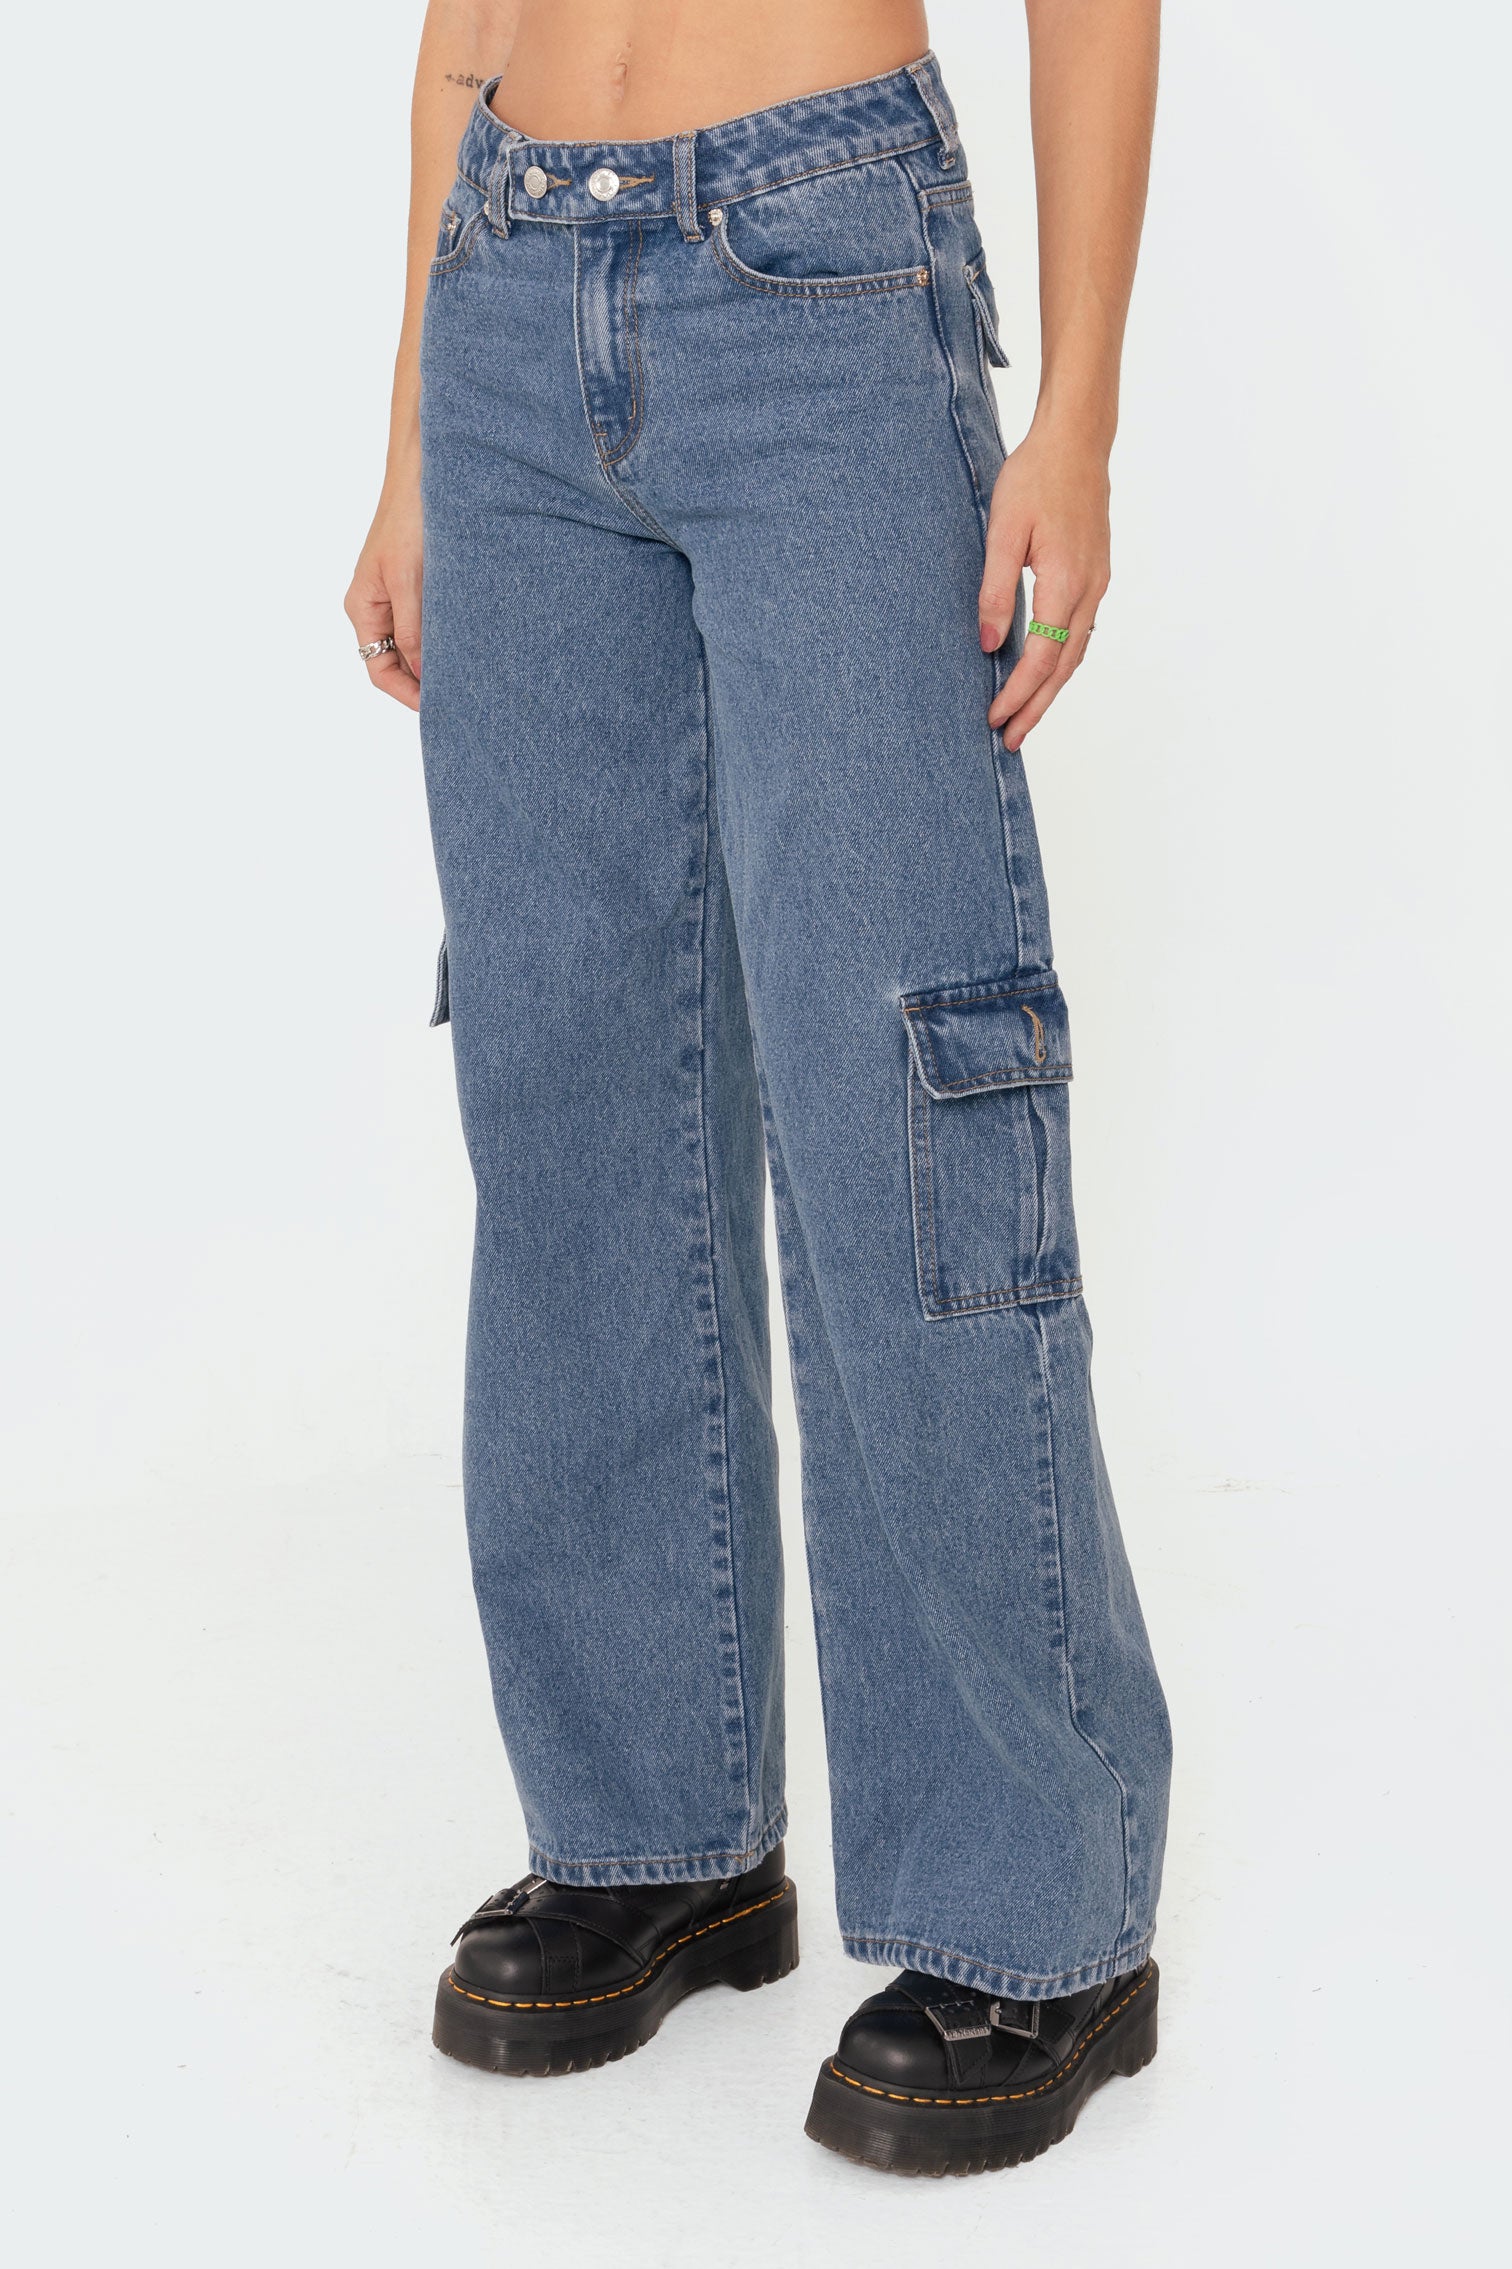 Trousers Flex Cotton Rewelly - DND Talis